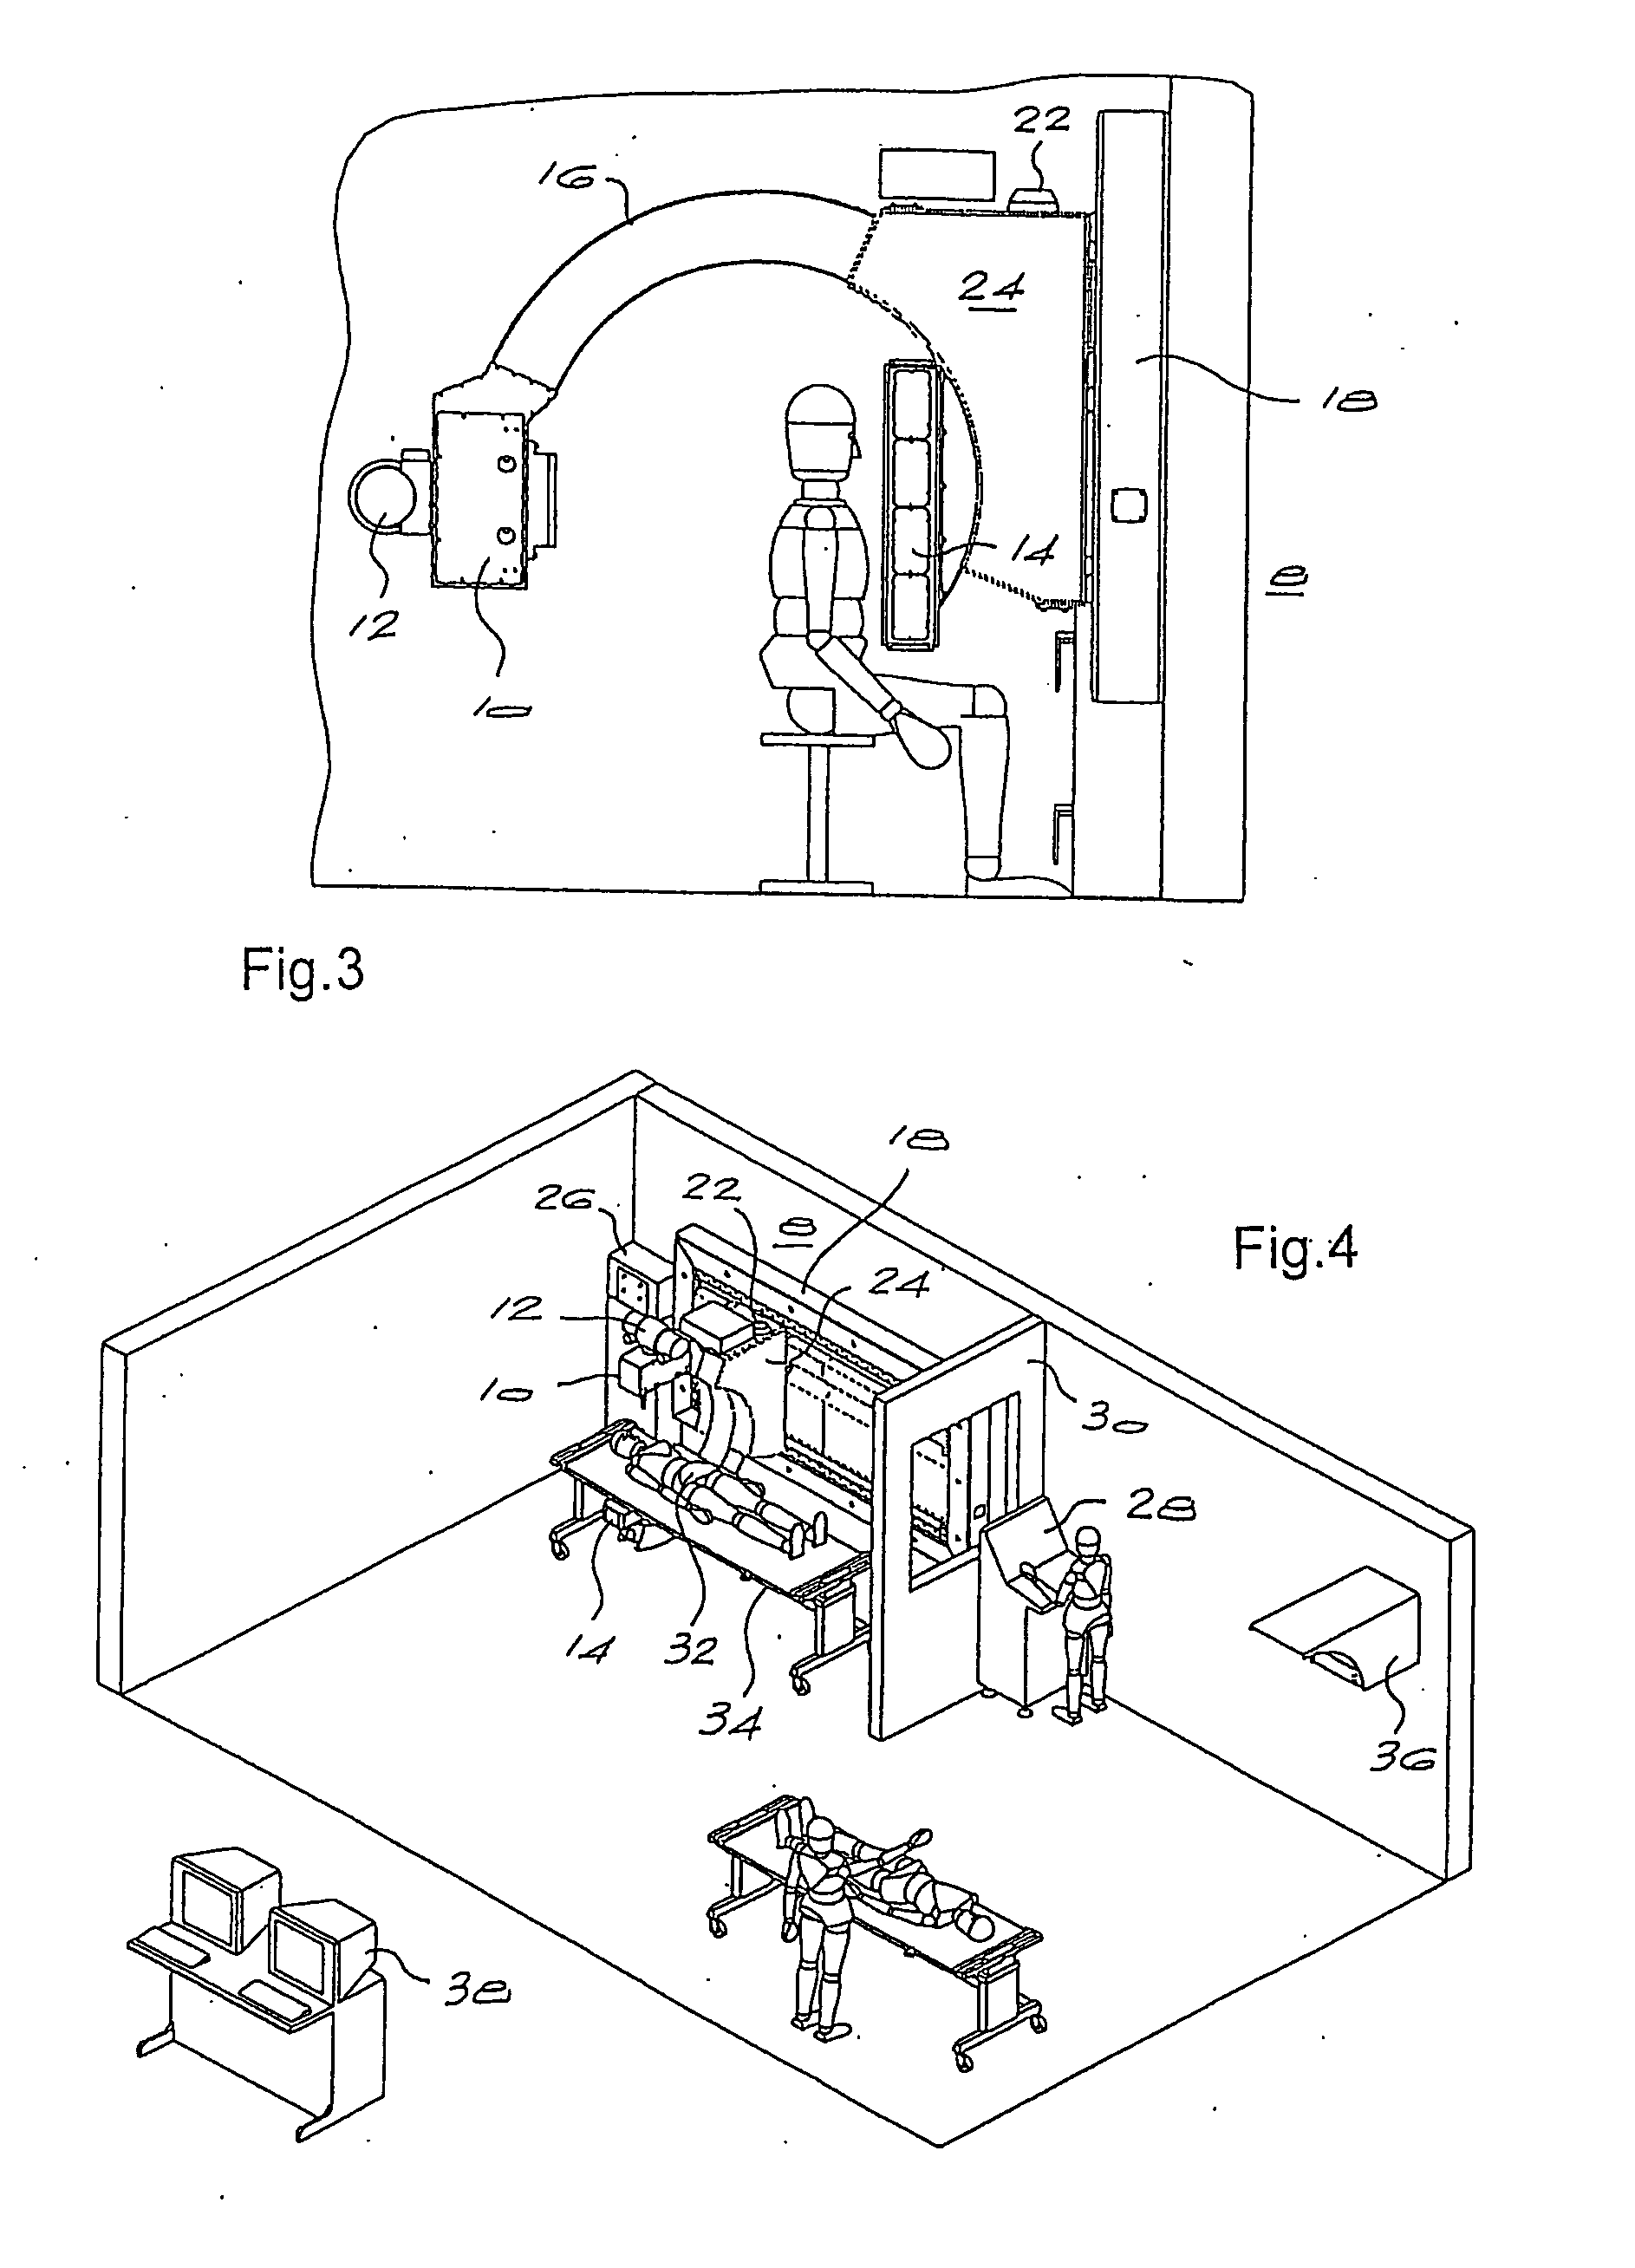 Scanning x-ray apparatus